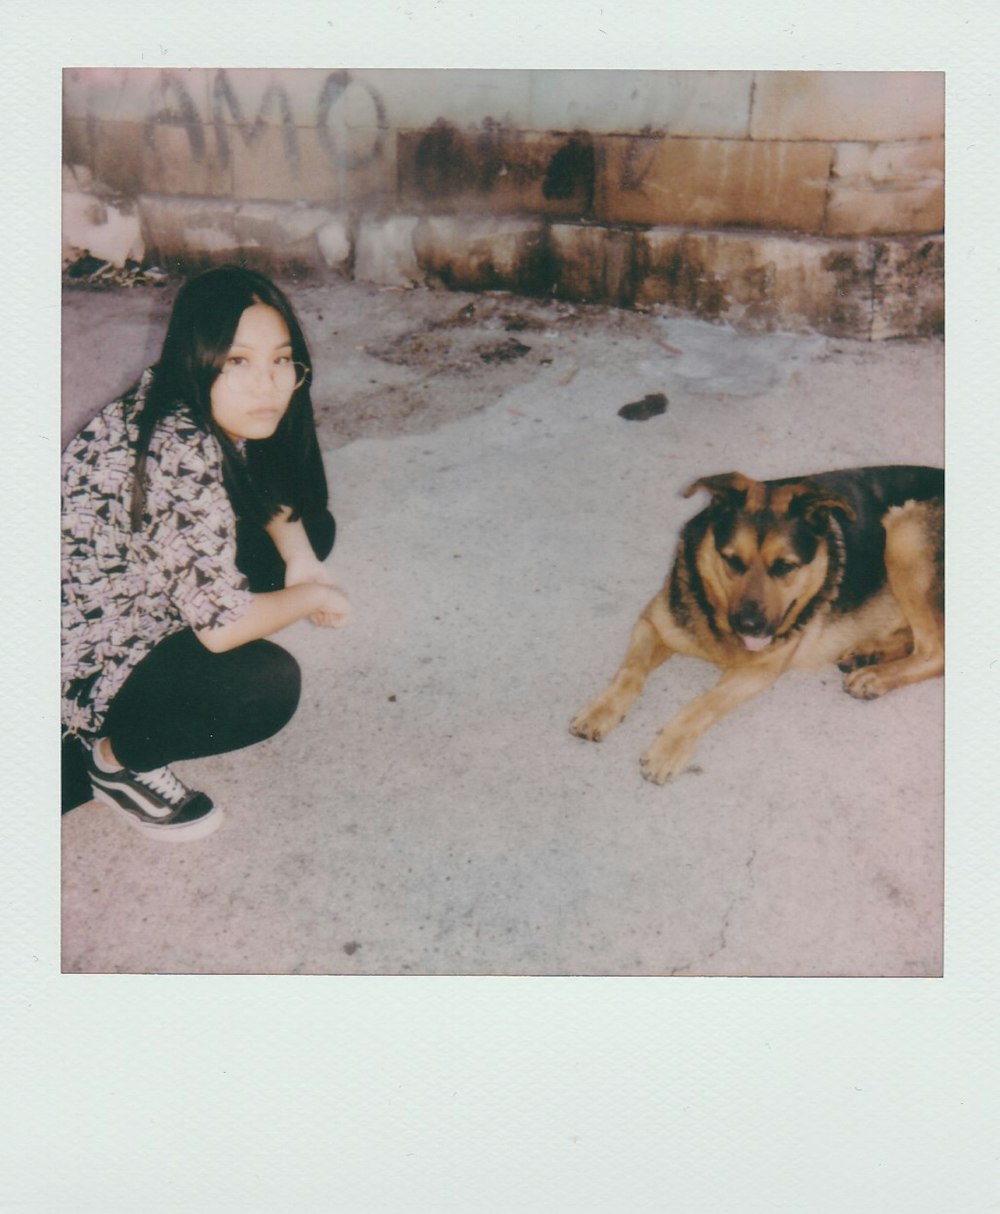 Una mujer arrodillada junto a un perro